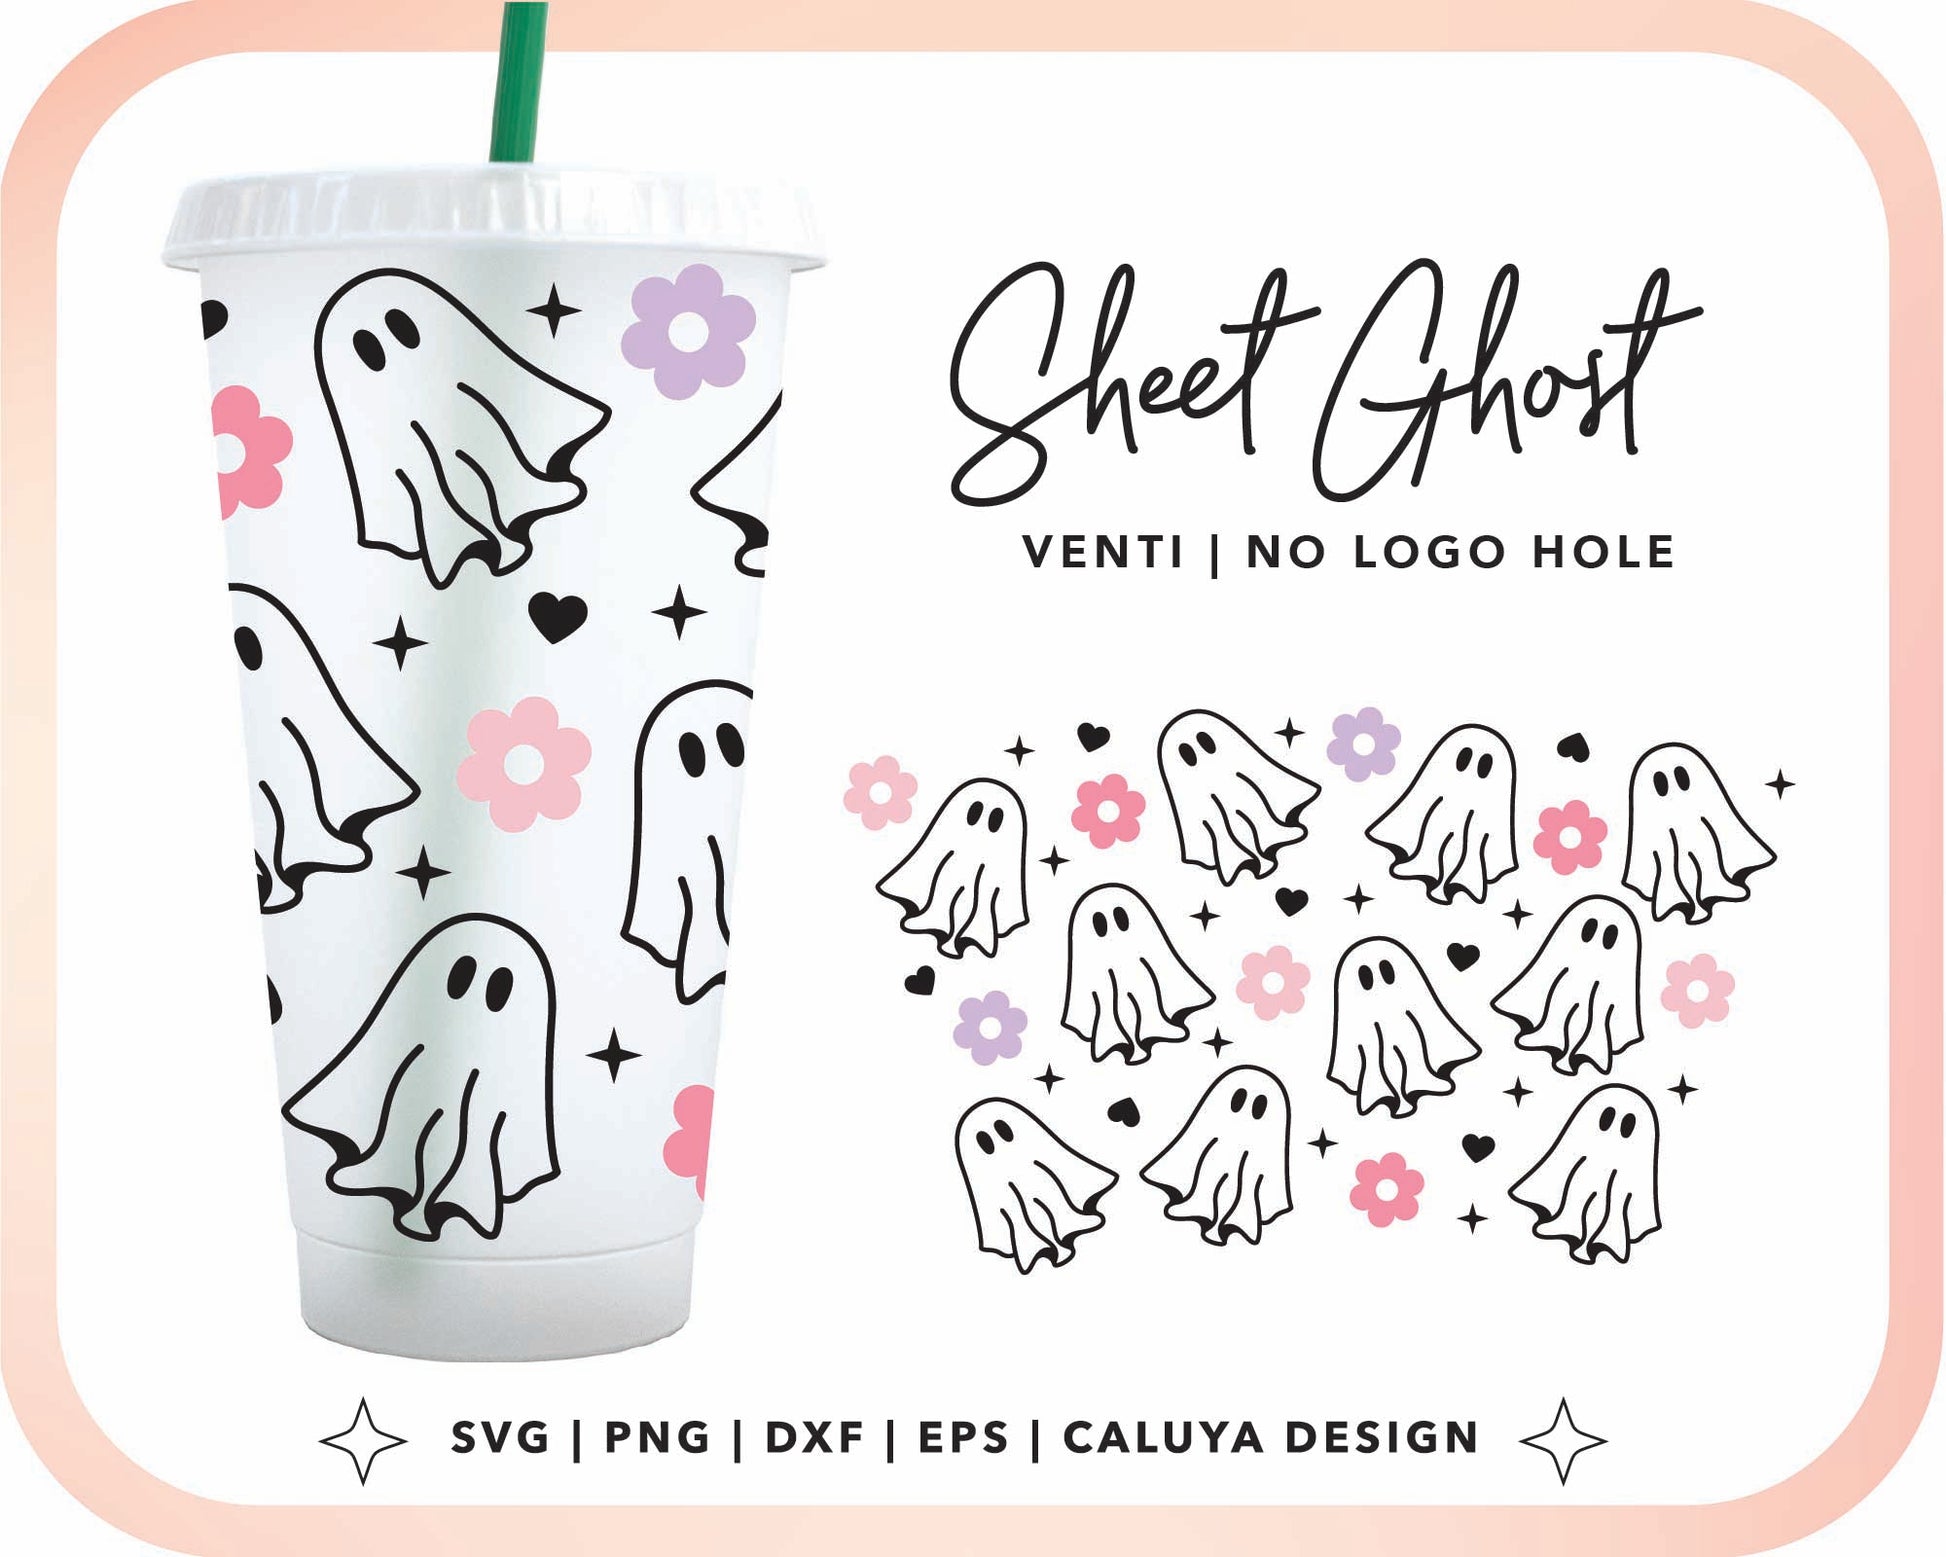 No Logo Venti Cup Wrap SVG | Sheet Ghost Cup Wrap Cut File for Cricut, Cameo Silhouette | Free SVG Cut File